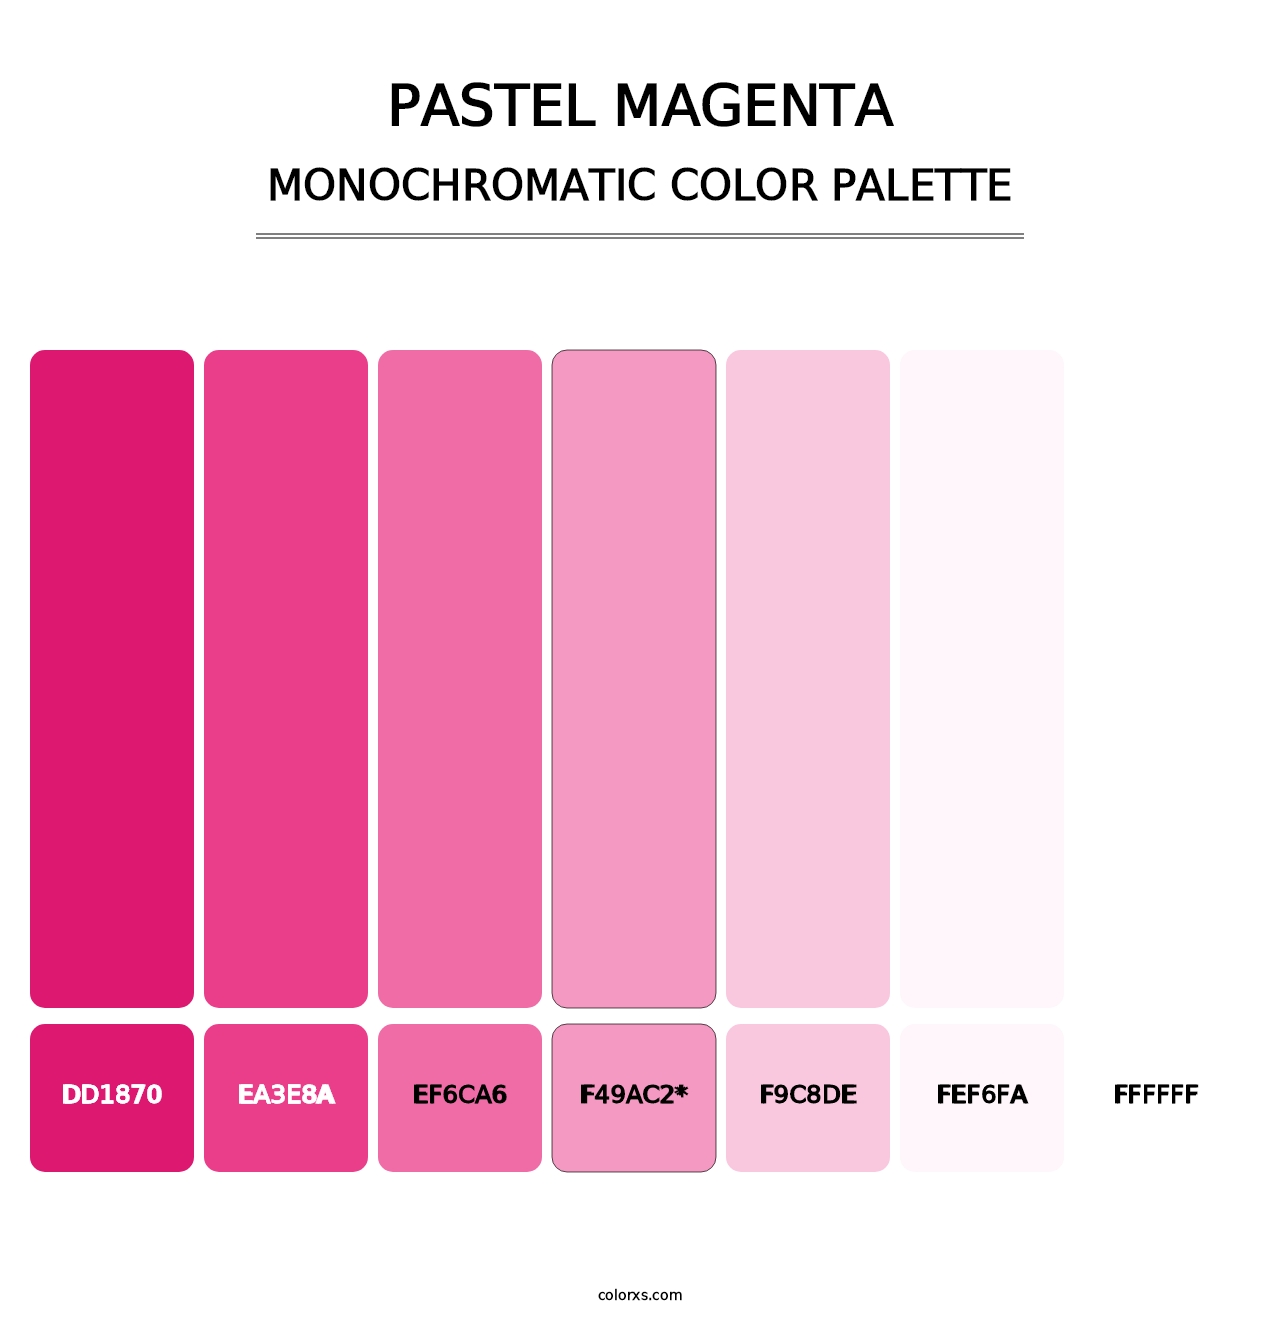 Pastel Magenta - Monochromatic Color Palette